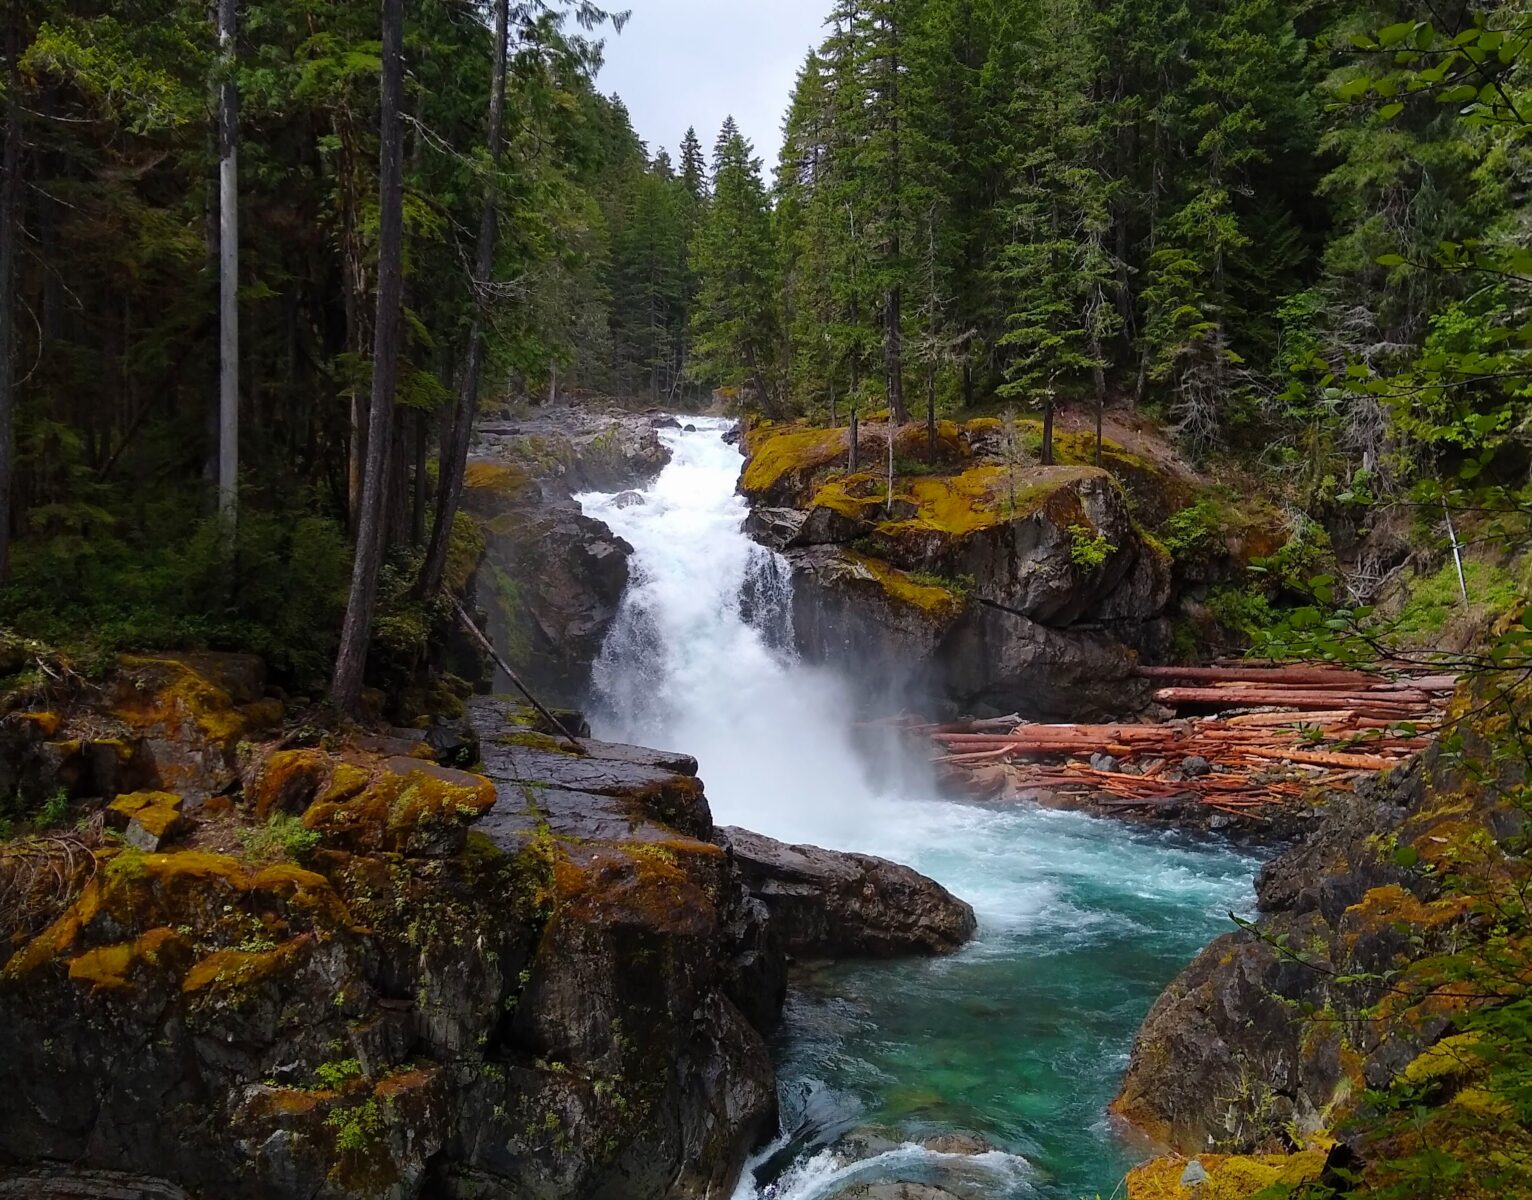 Best Waterfall hikes near Seattle - Ordinary Adventures